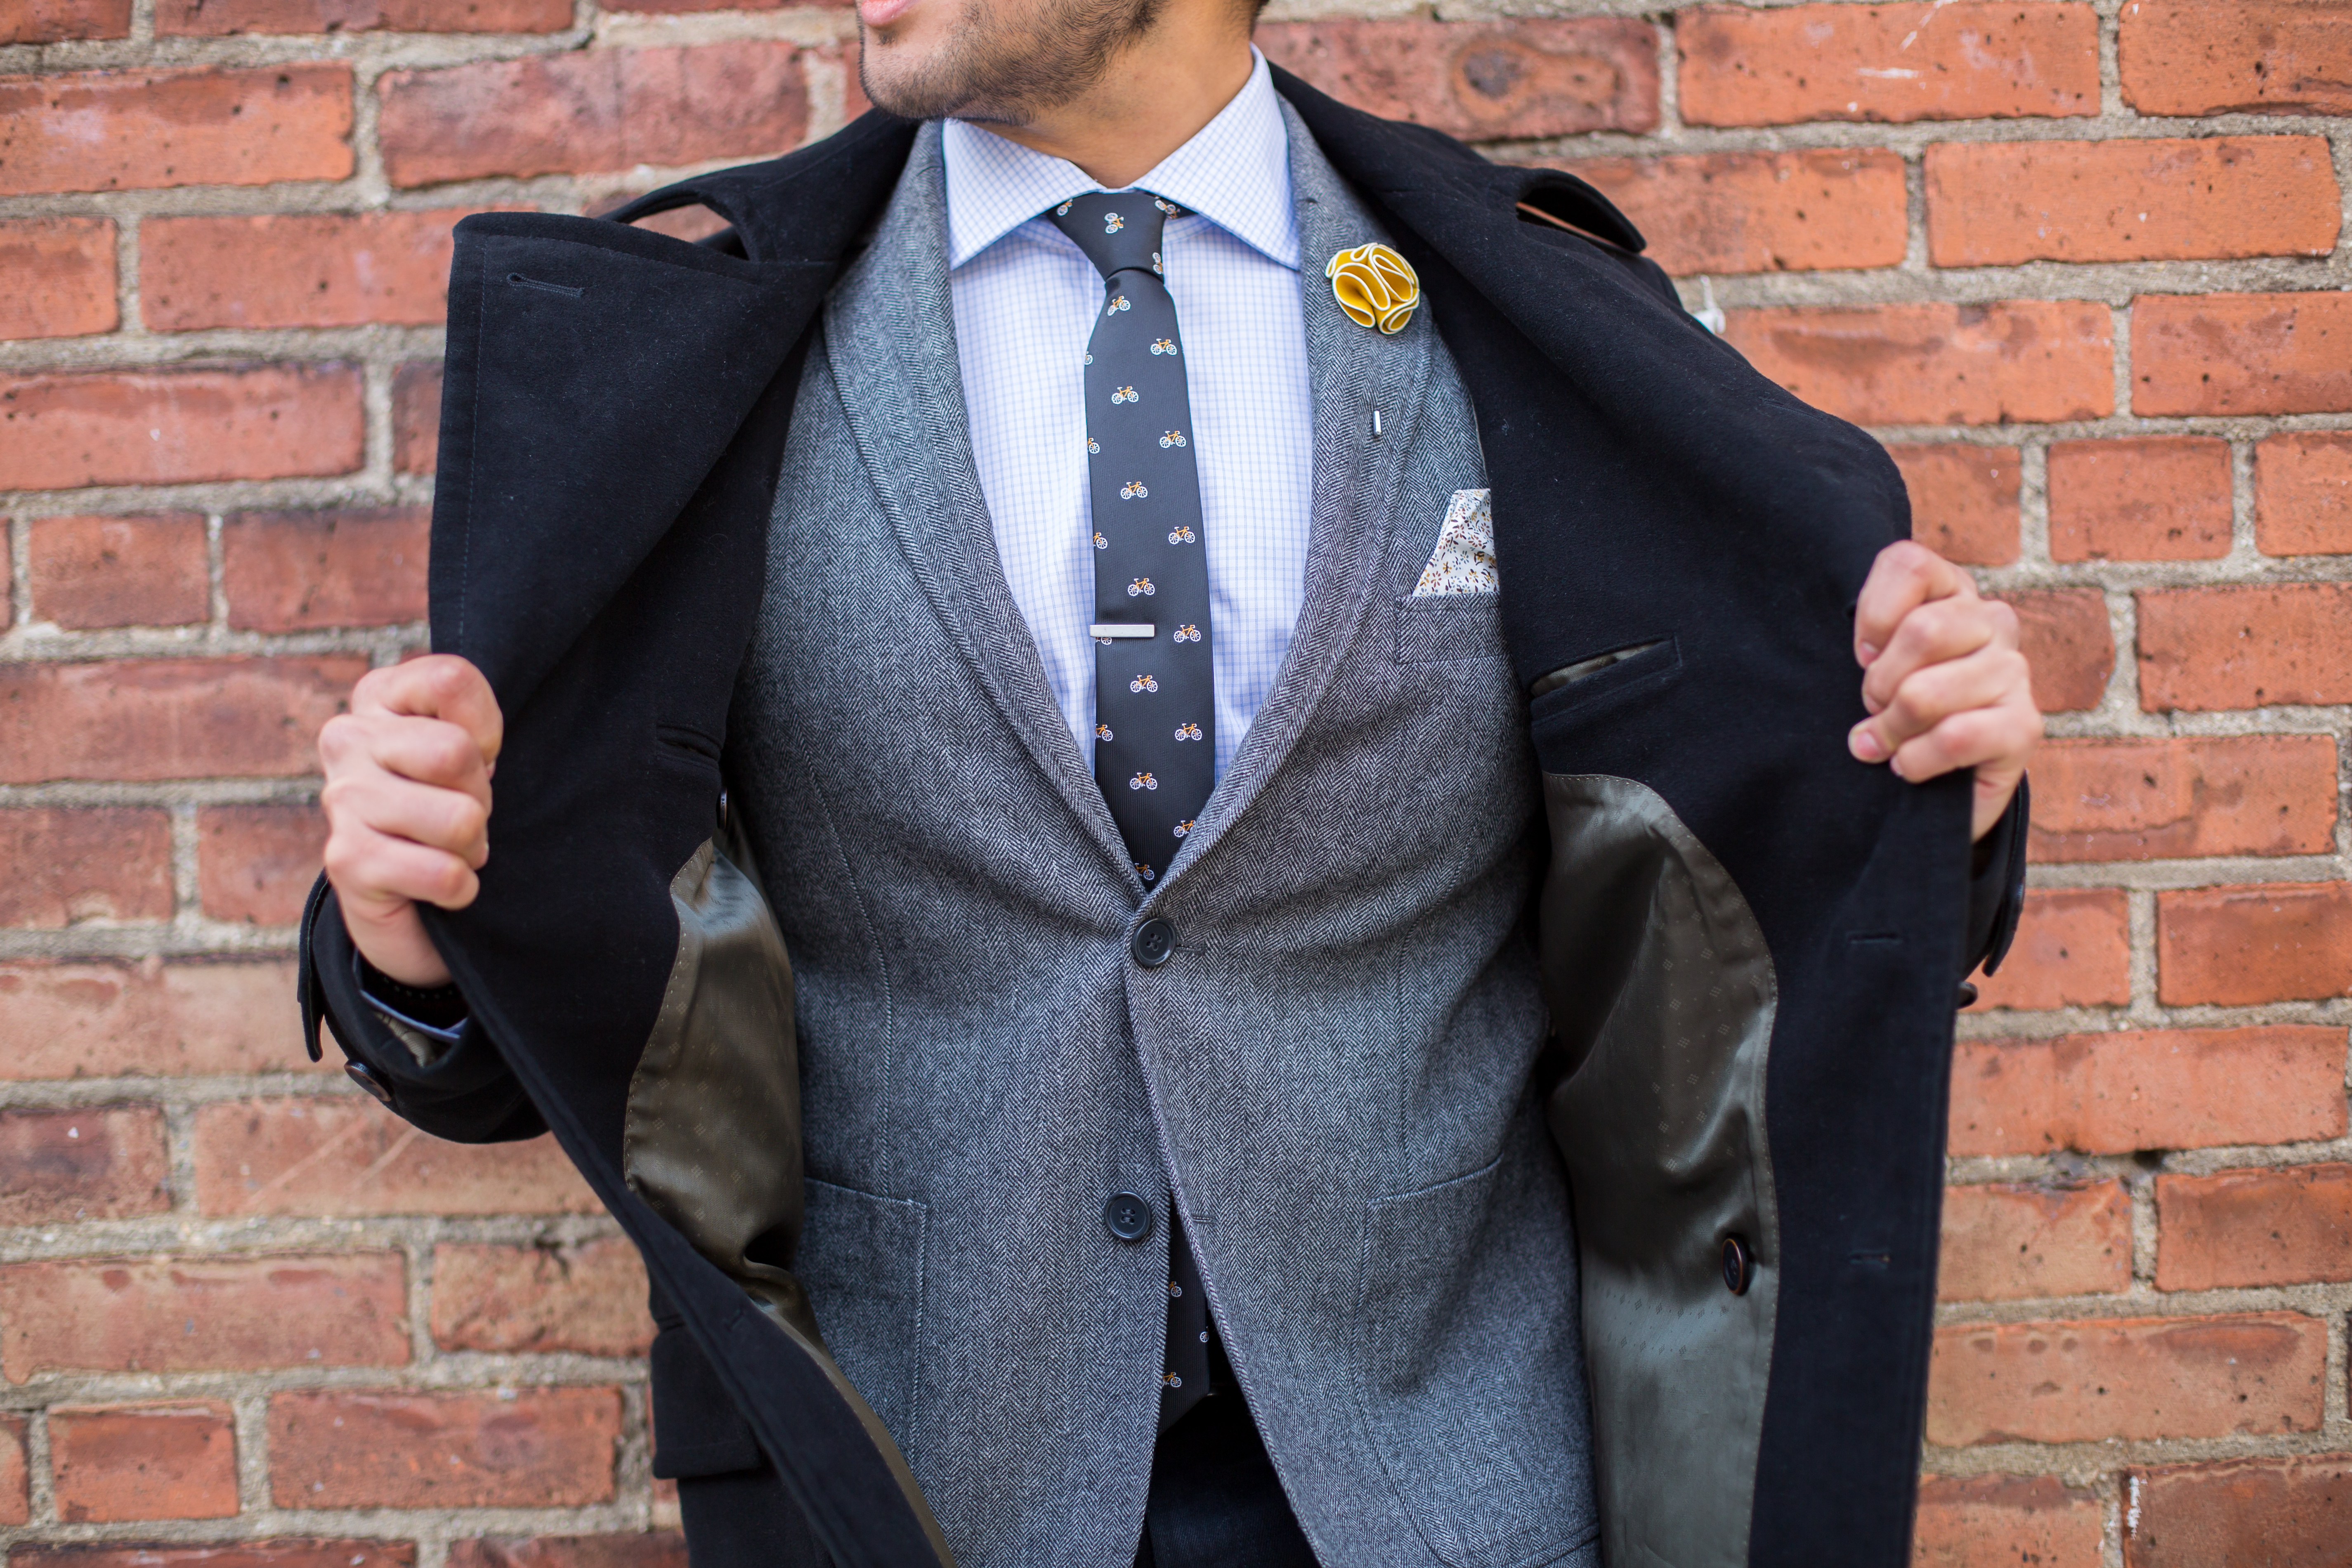 grey suit with bicycle tie and black top coat